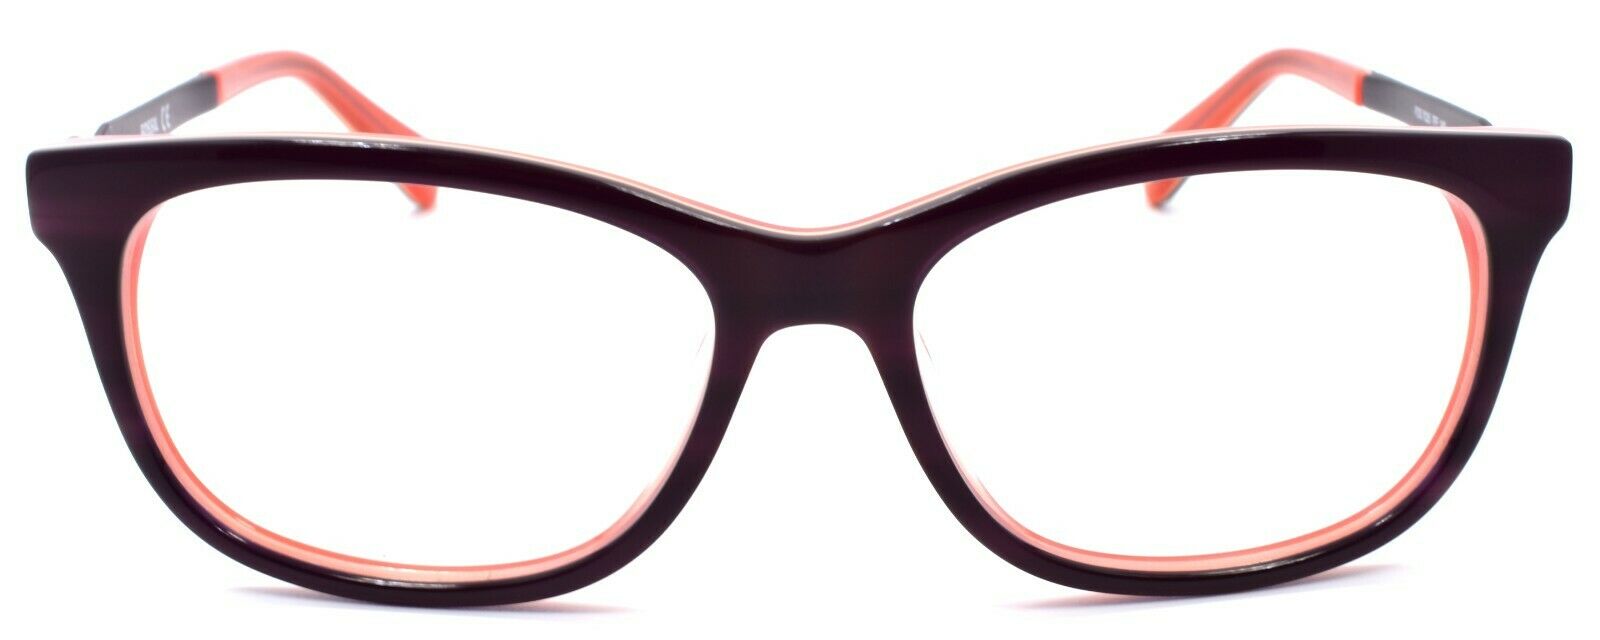 2-Fossil FOS 7025 7FF Women's Eyeglasses Frames 50-15-140 Purple Violet Red-716736029269-IKSpecs